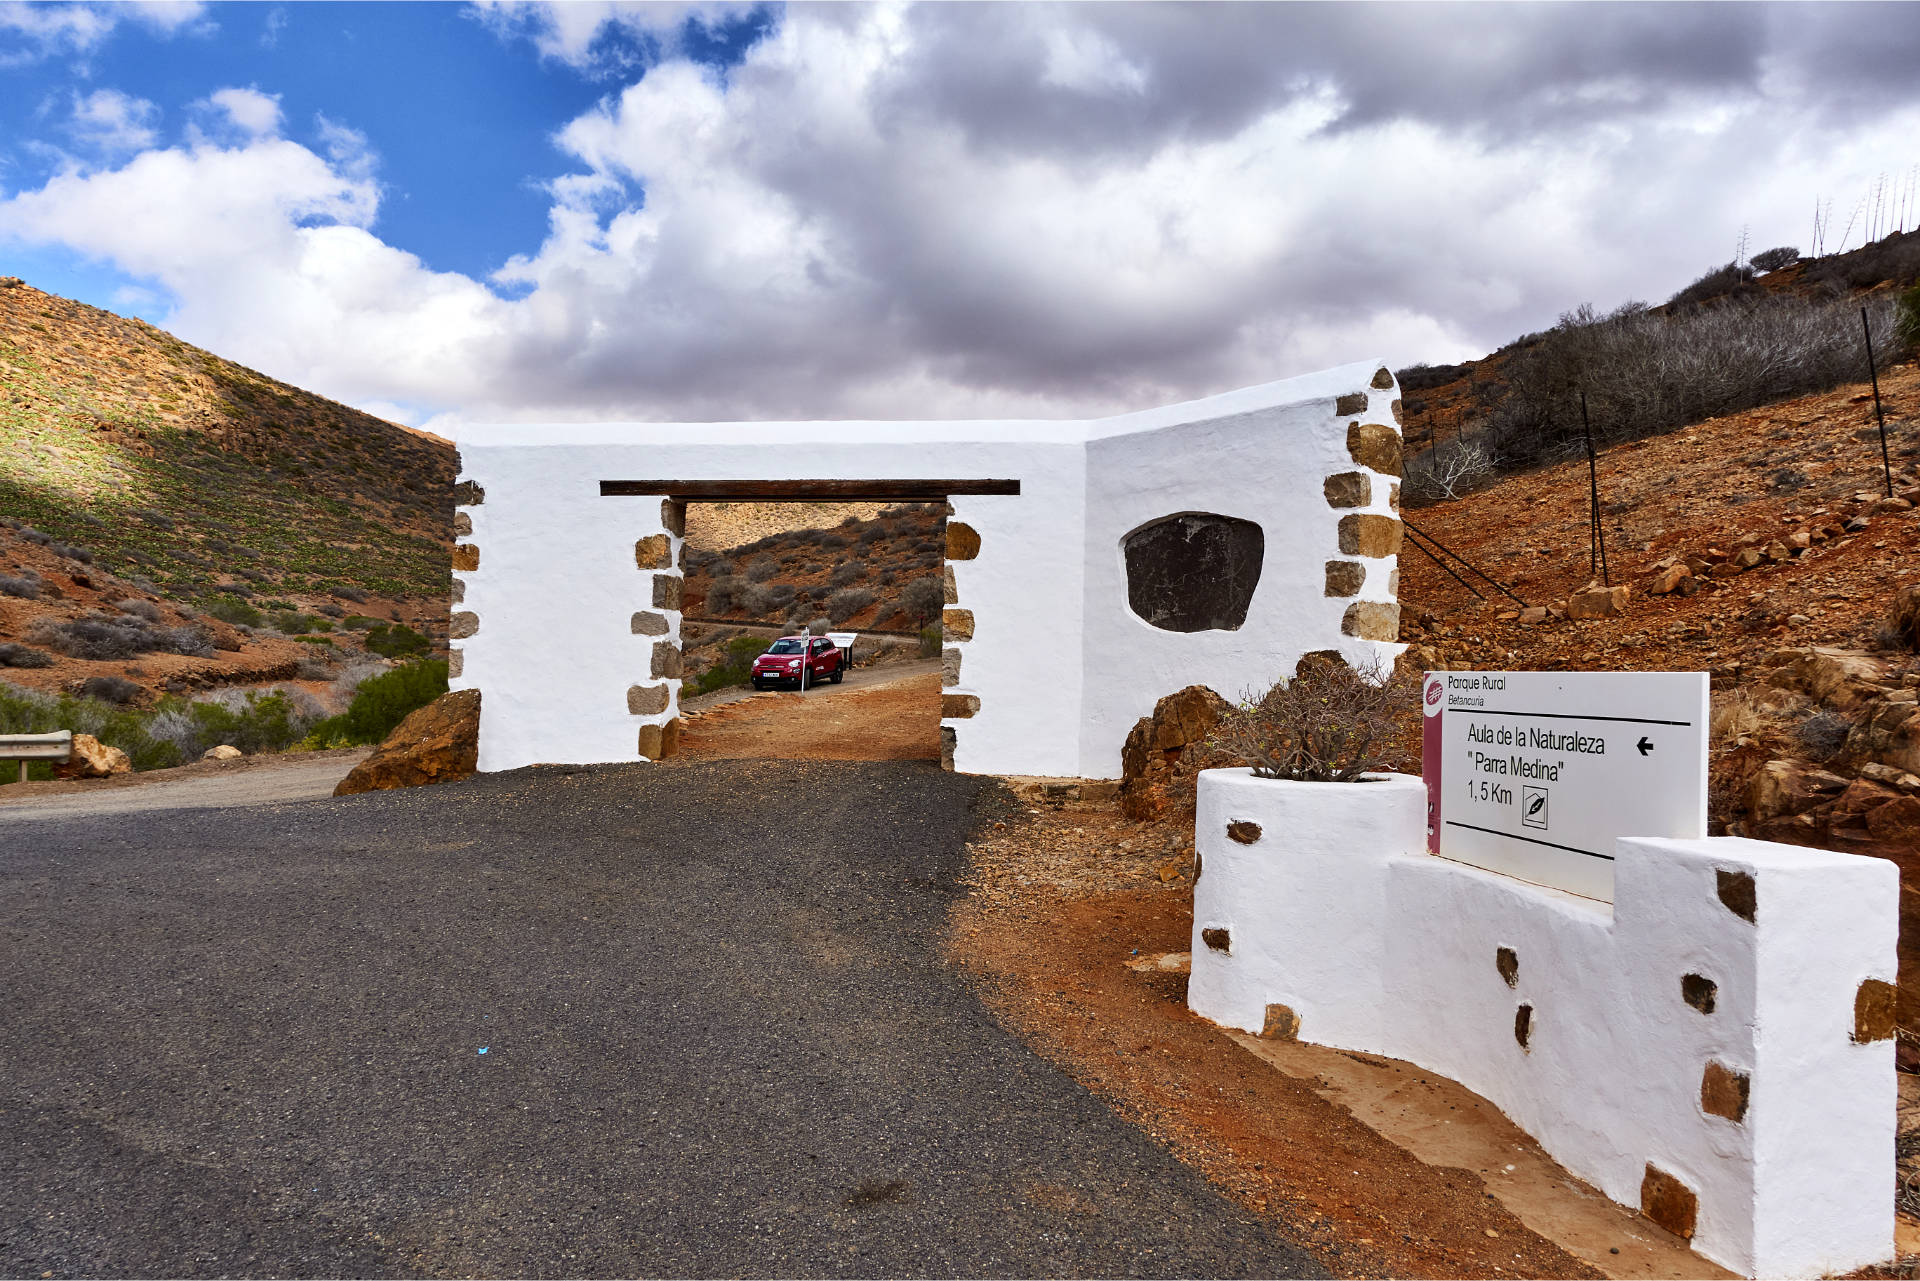 Start am Barranco de Palomares und dem Zugang zum Parra Medina an der FV-30 auf 327 m.